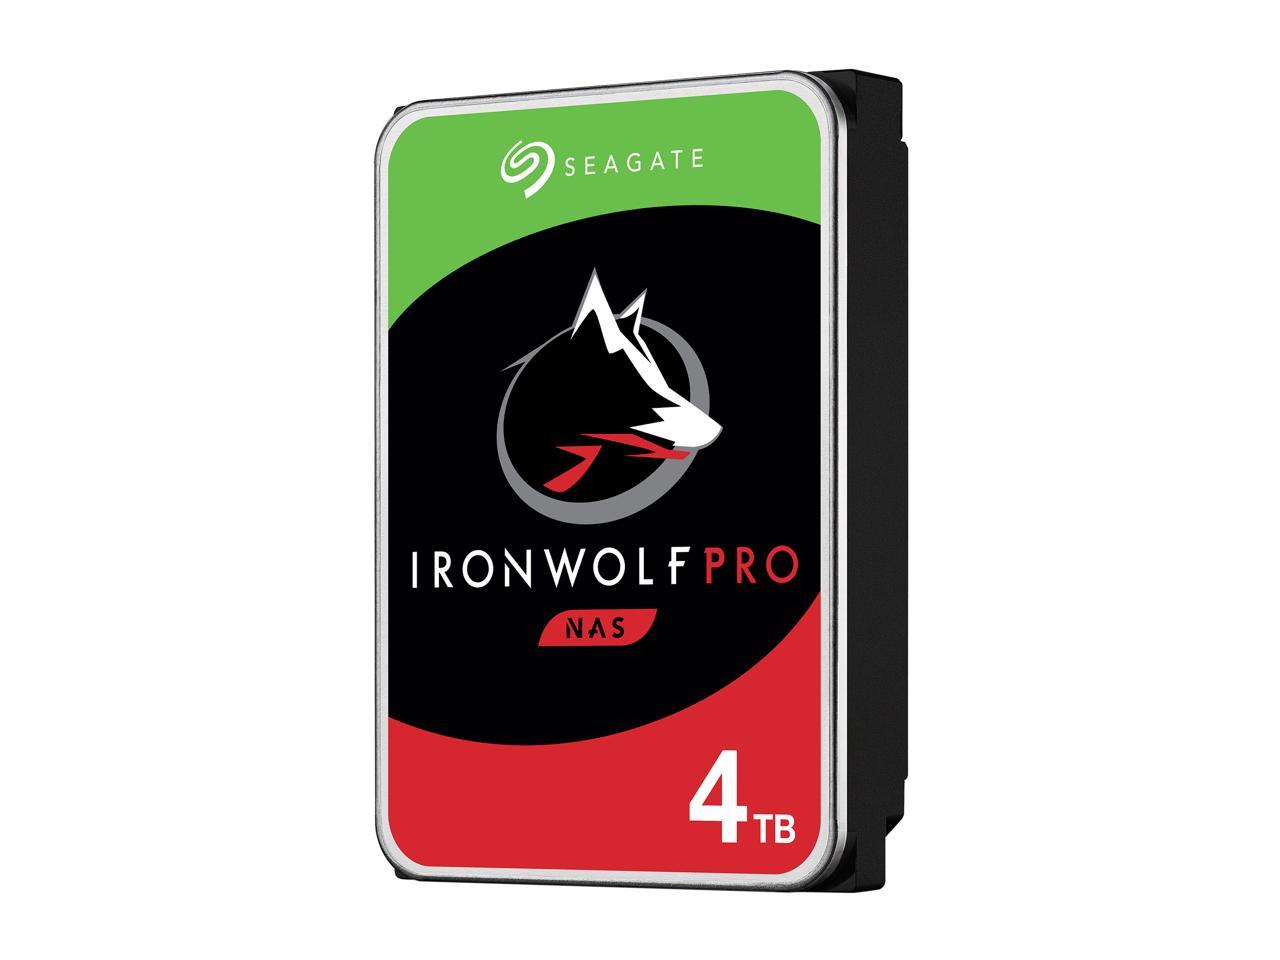 Seagate IronWolf Pro 4TB SATA III 3.5" Internal NAS Hard Drive, 7200 RPM $99.99